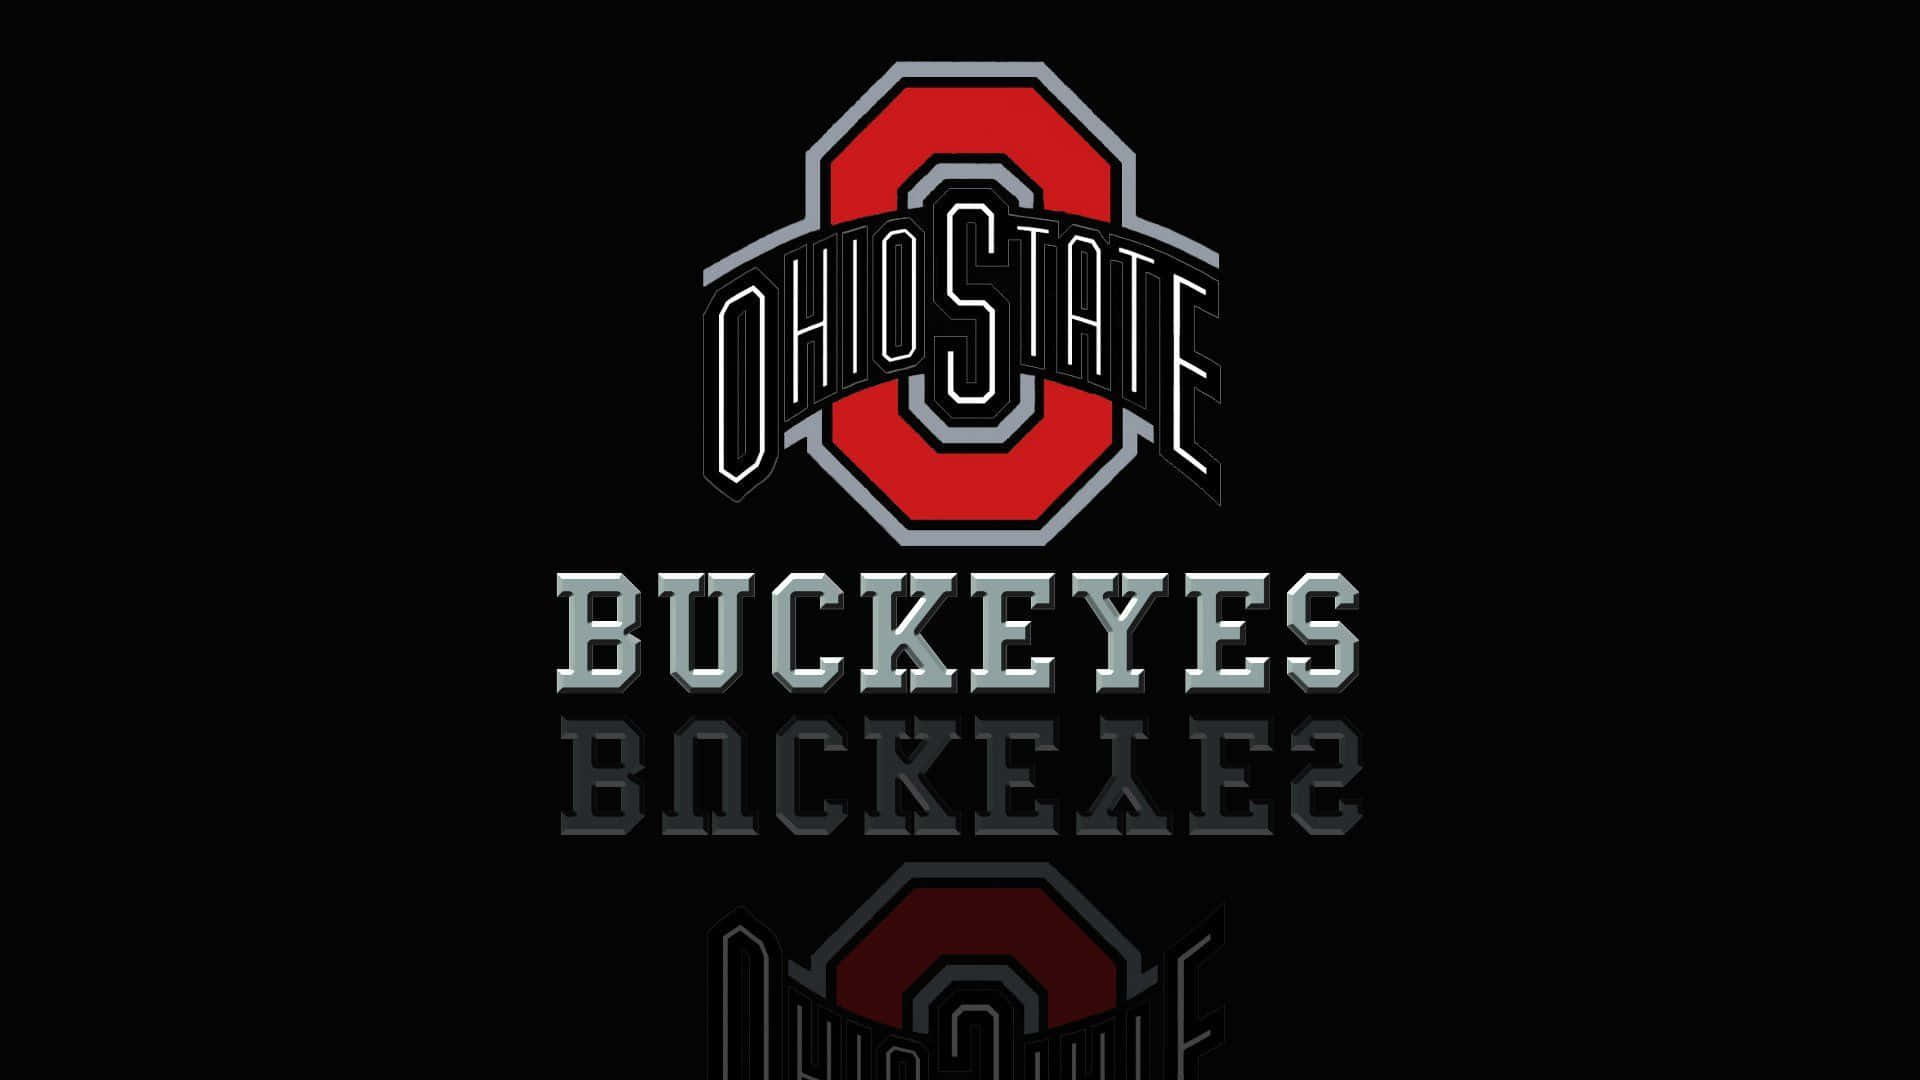 Black Surface Reflecting The Buckeyes Ohio State Logo Wallpaper